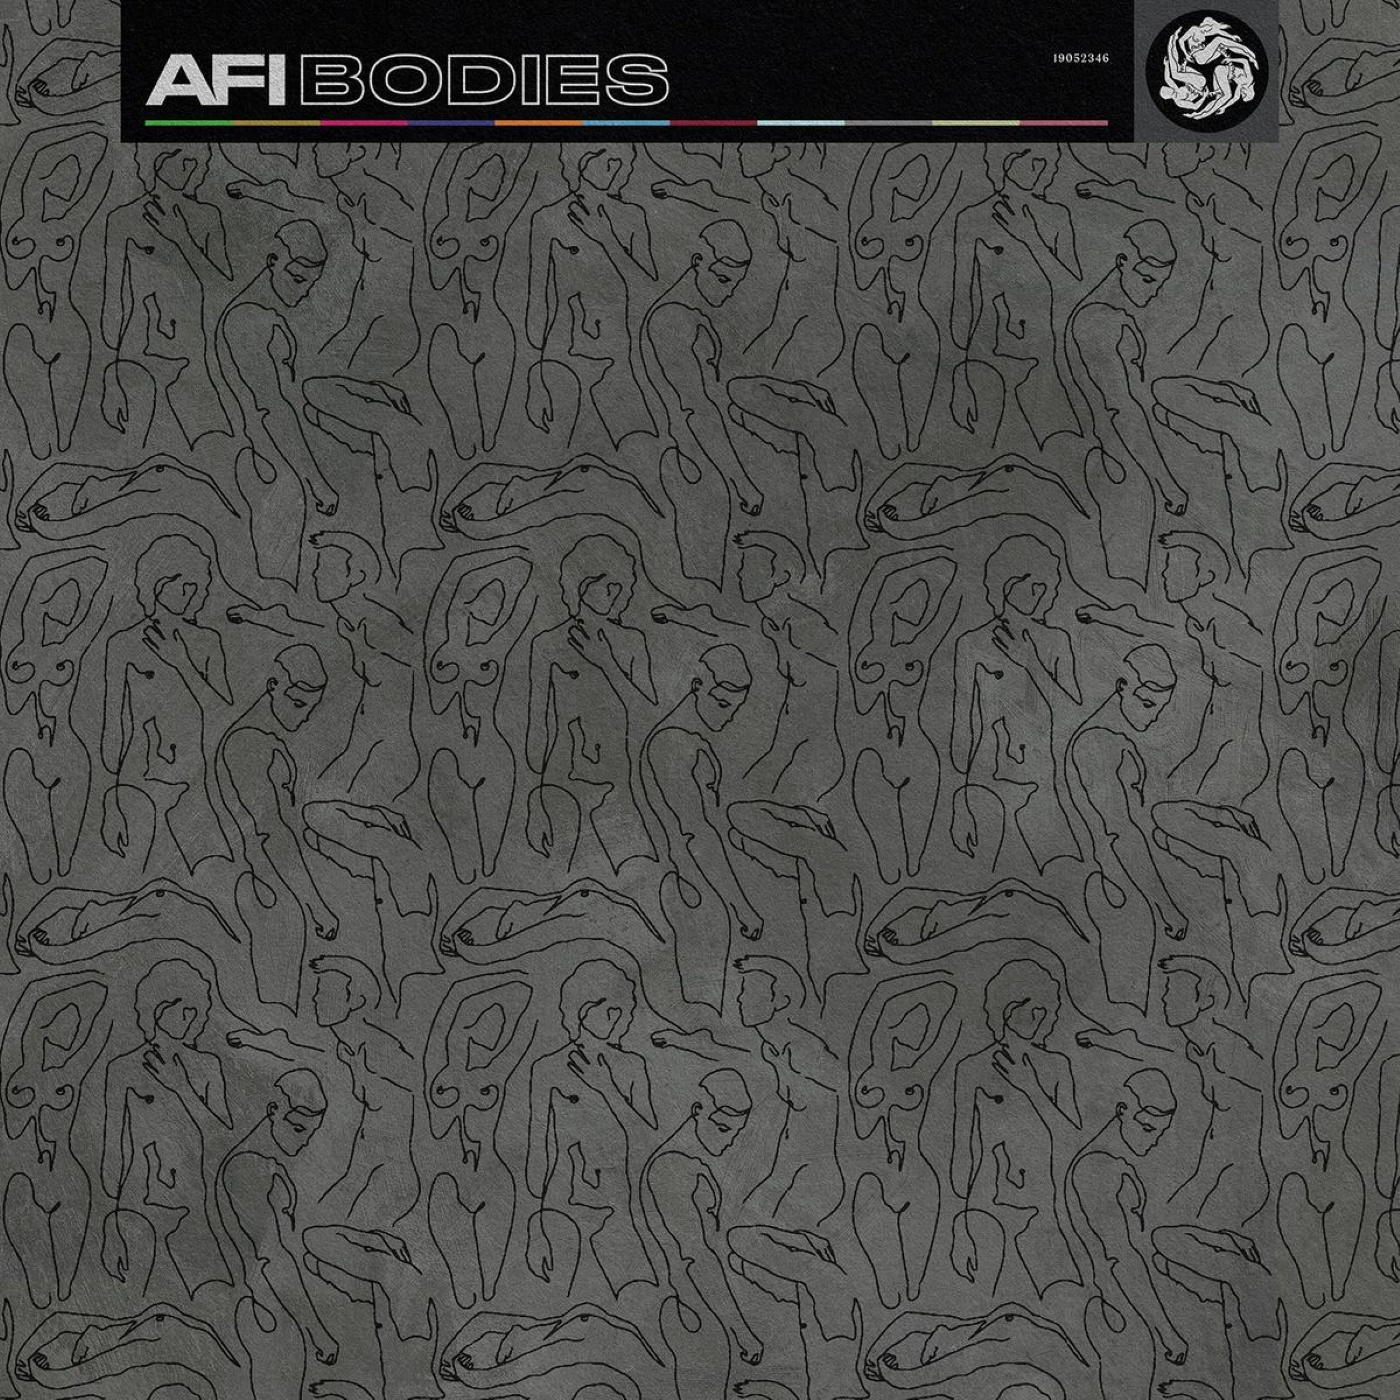 Afi - Bodies - (Vinyl)